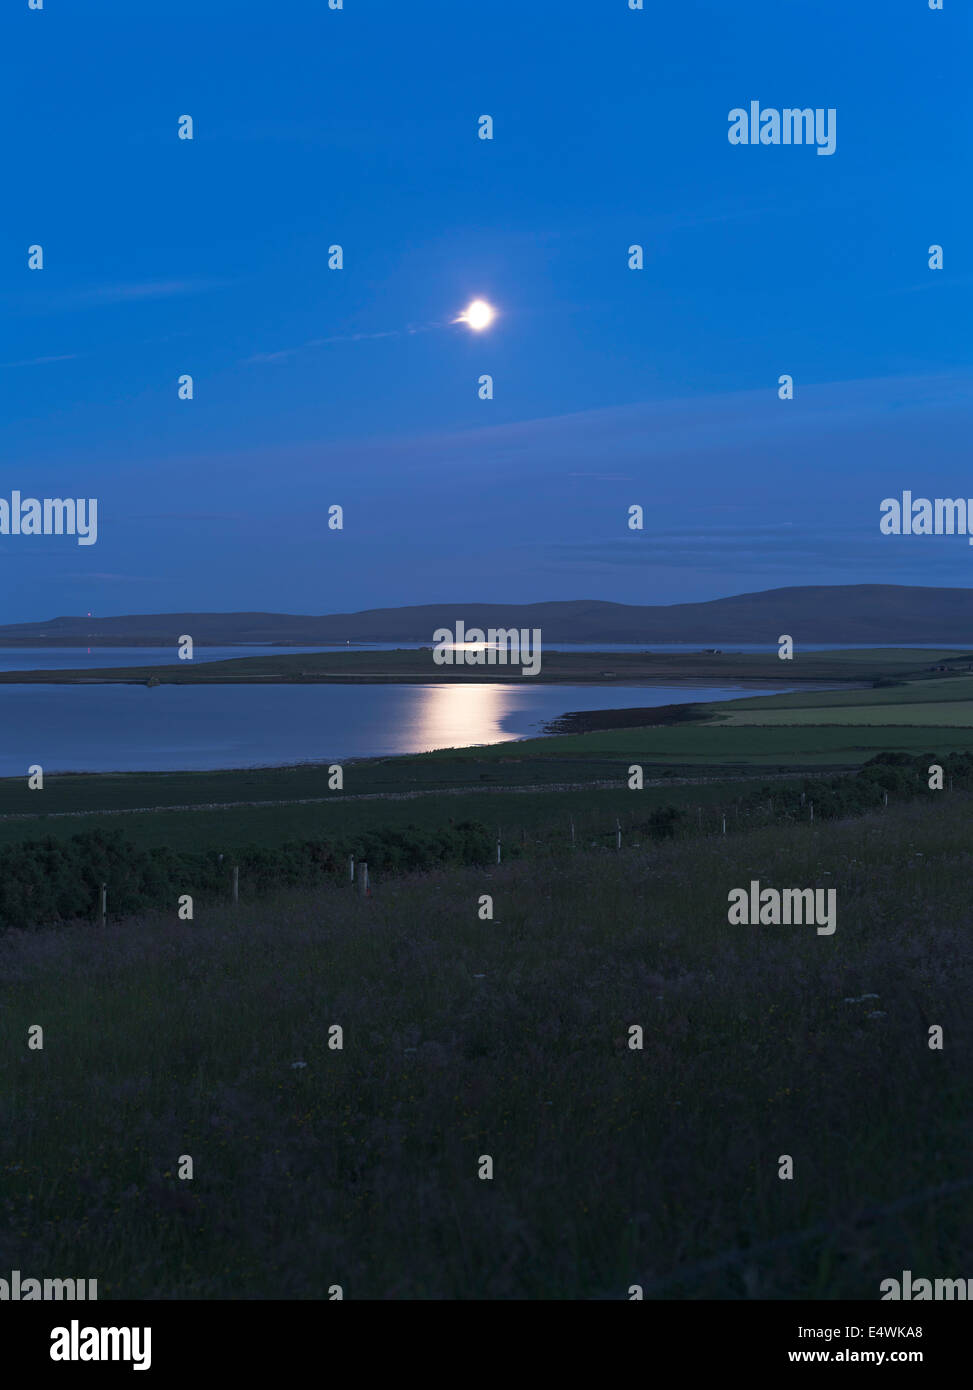 dh Dusk paesaggio Campagna SCAPA FLUSSO ORKNEY ISLES Moonlight on acqua luna luce mare cielo uk Foto Stock